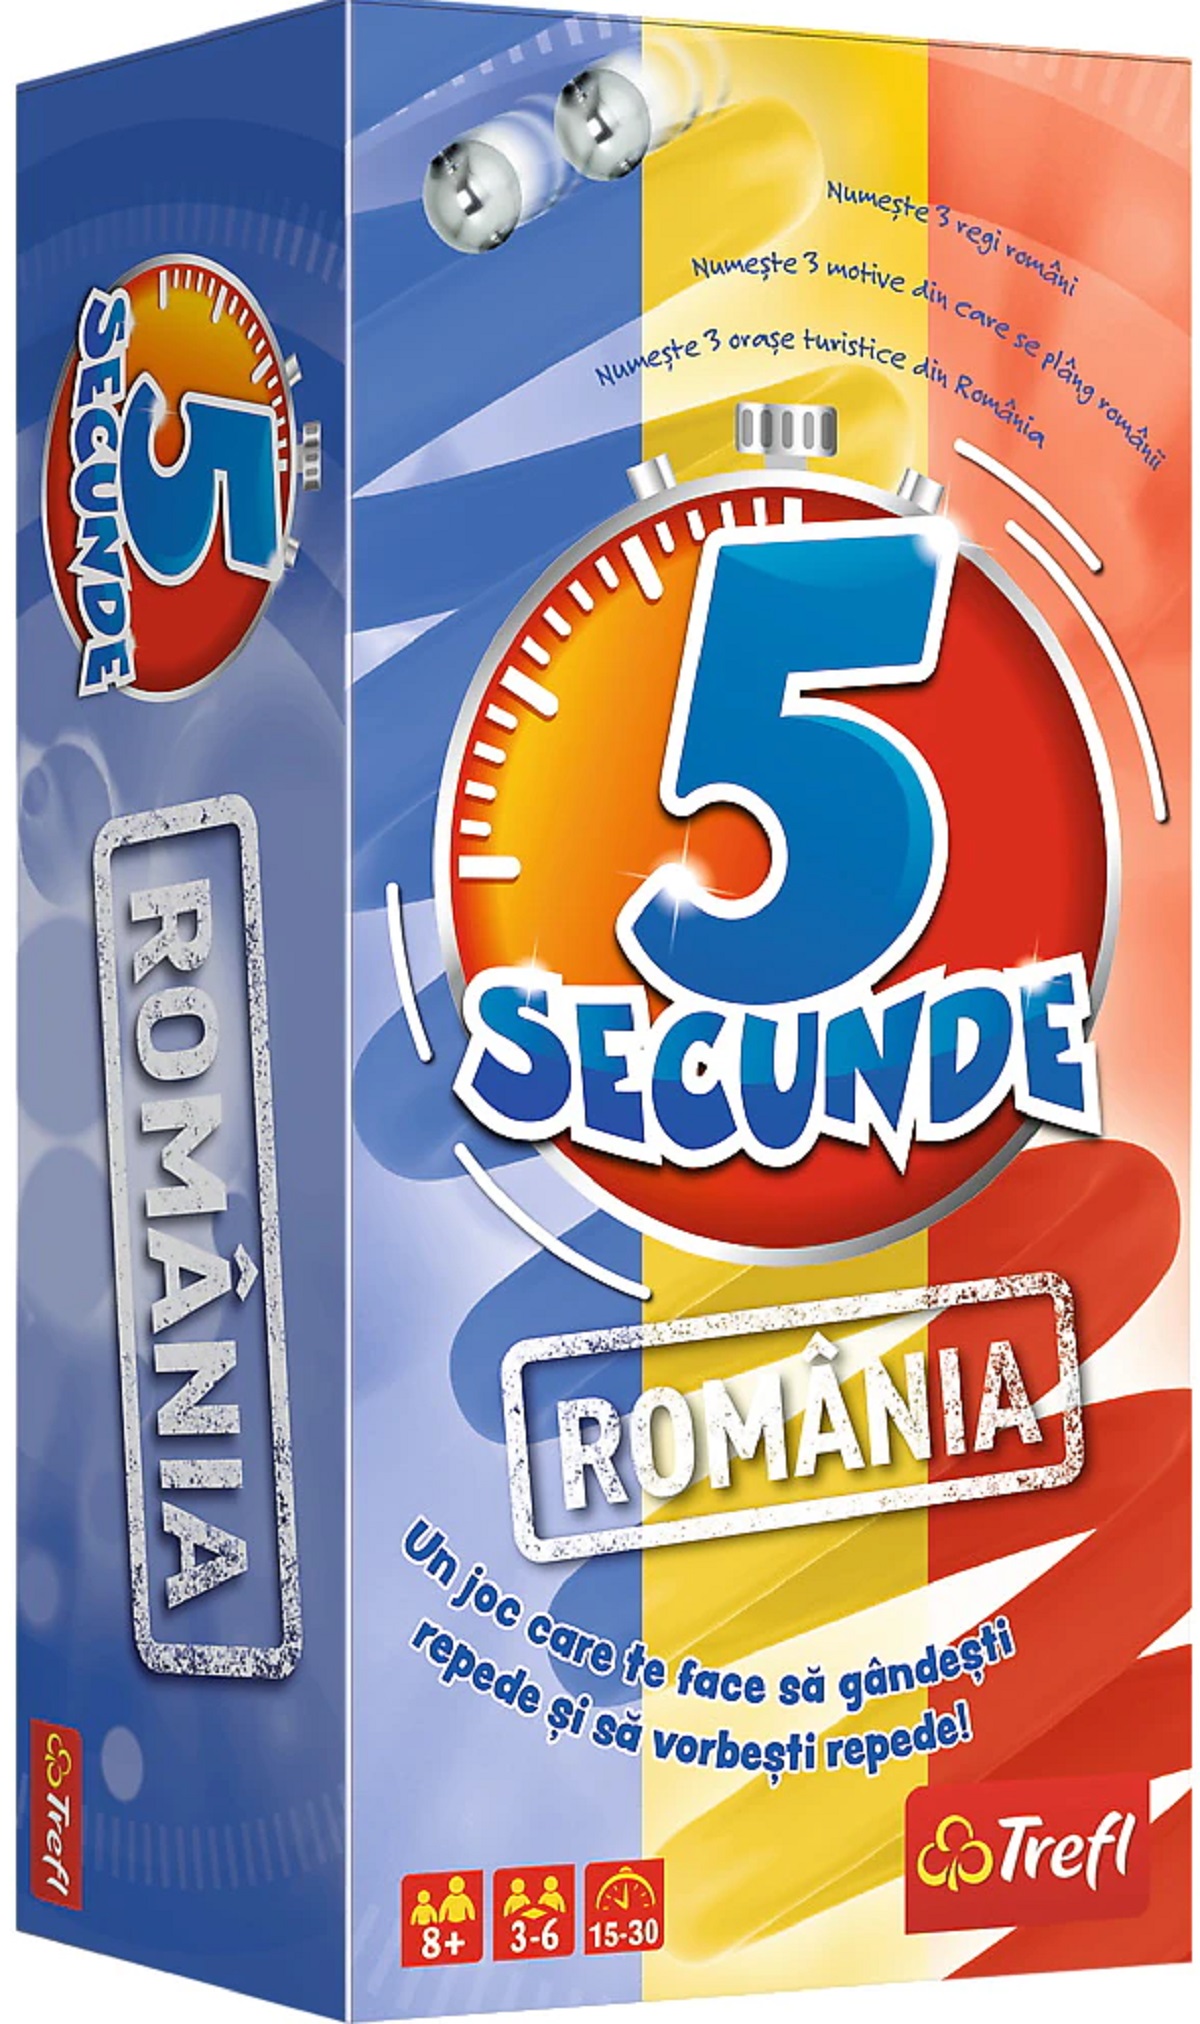 Joc 5 secunde. Romania